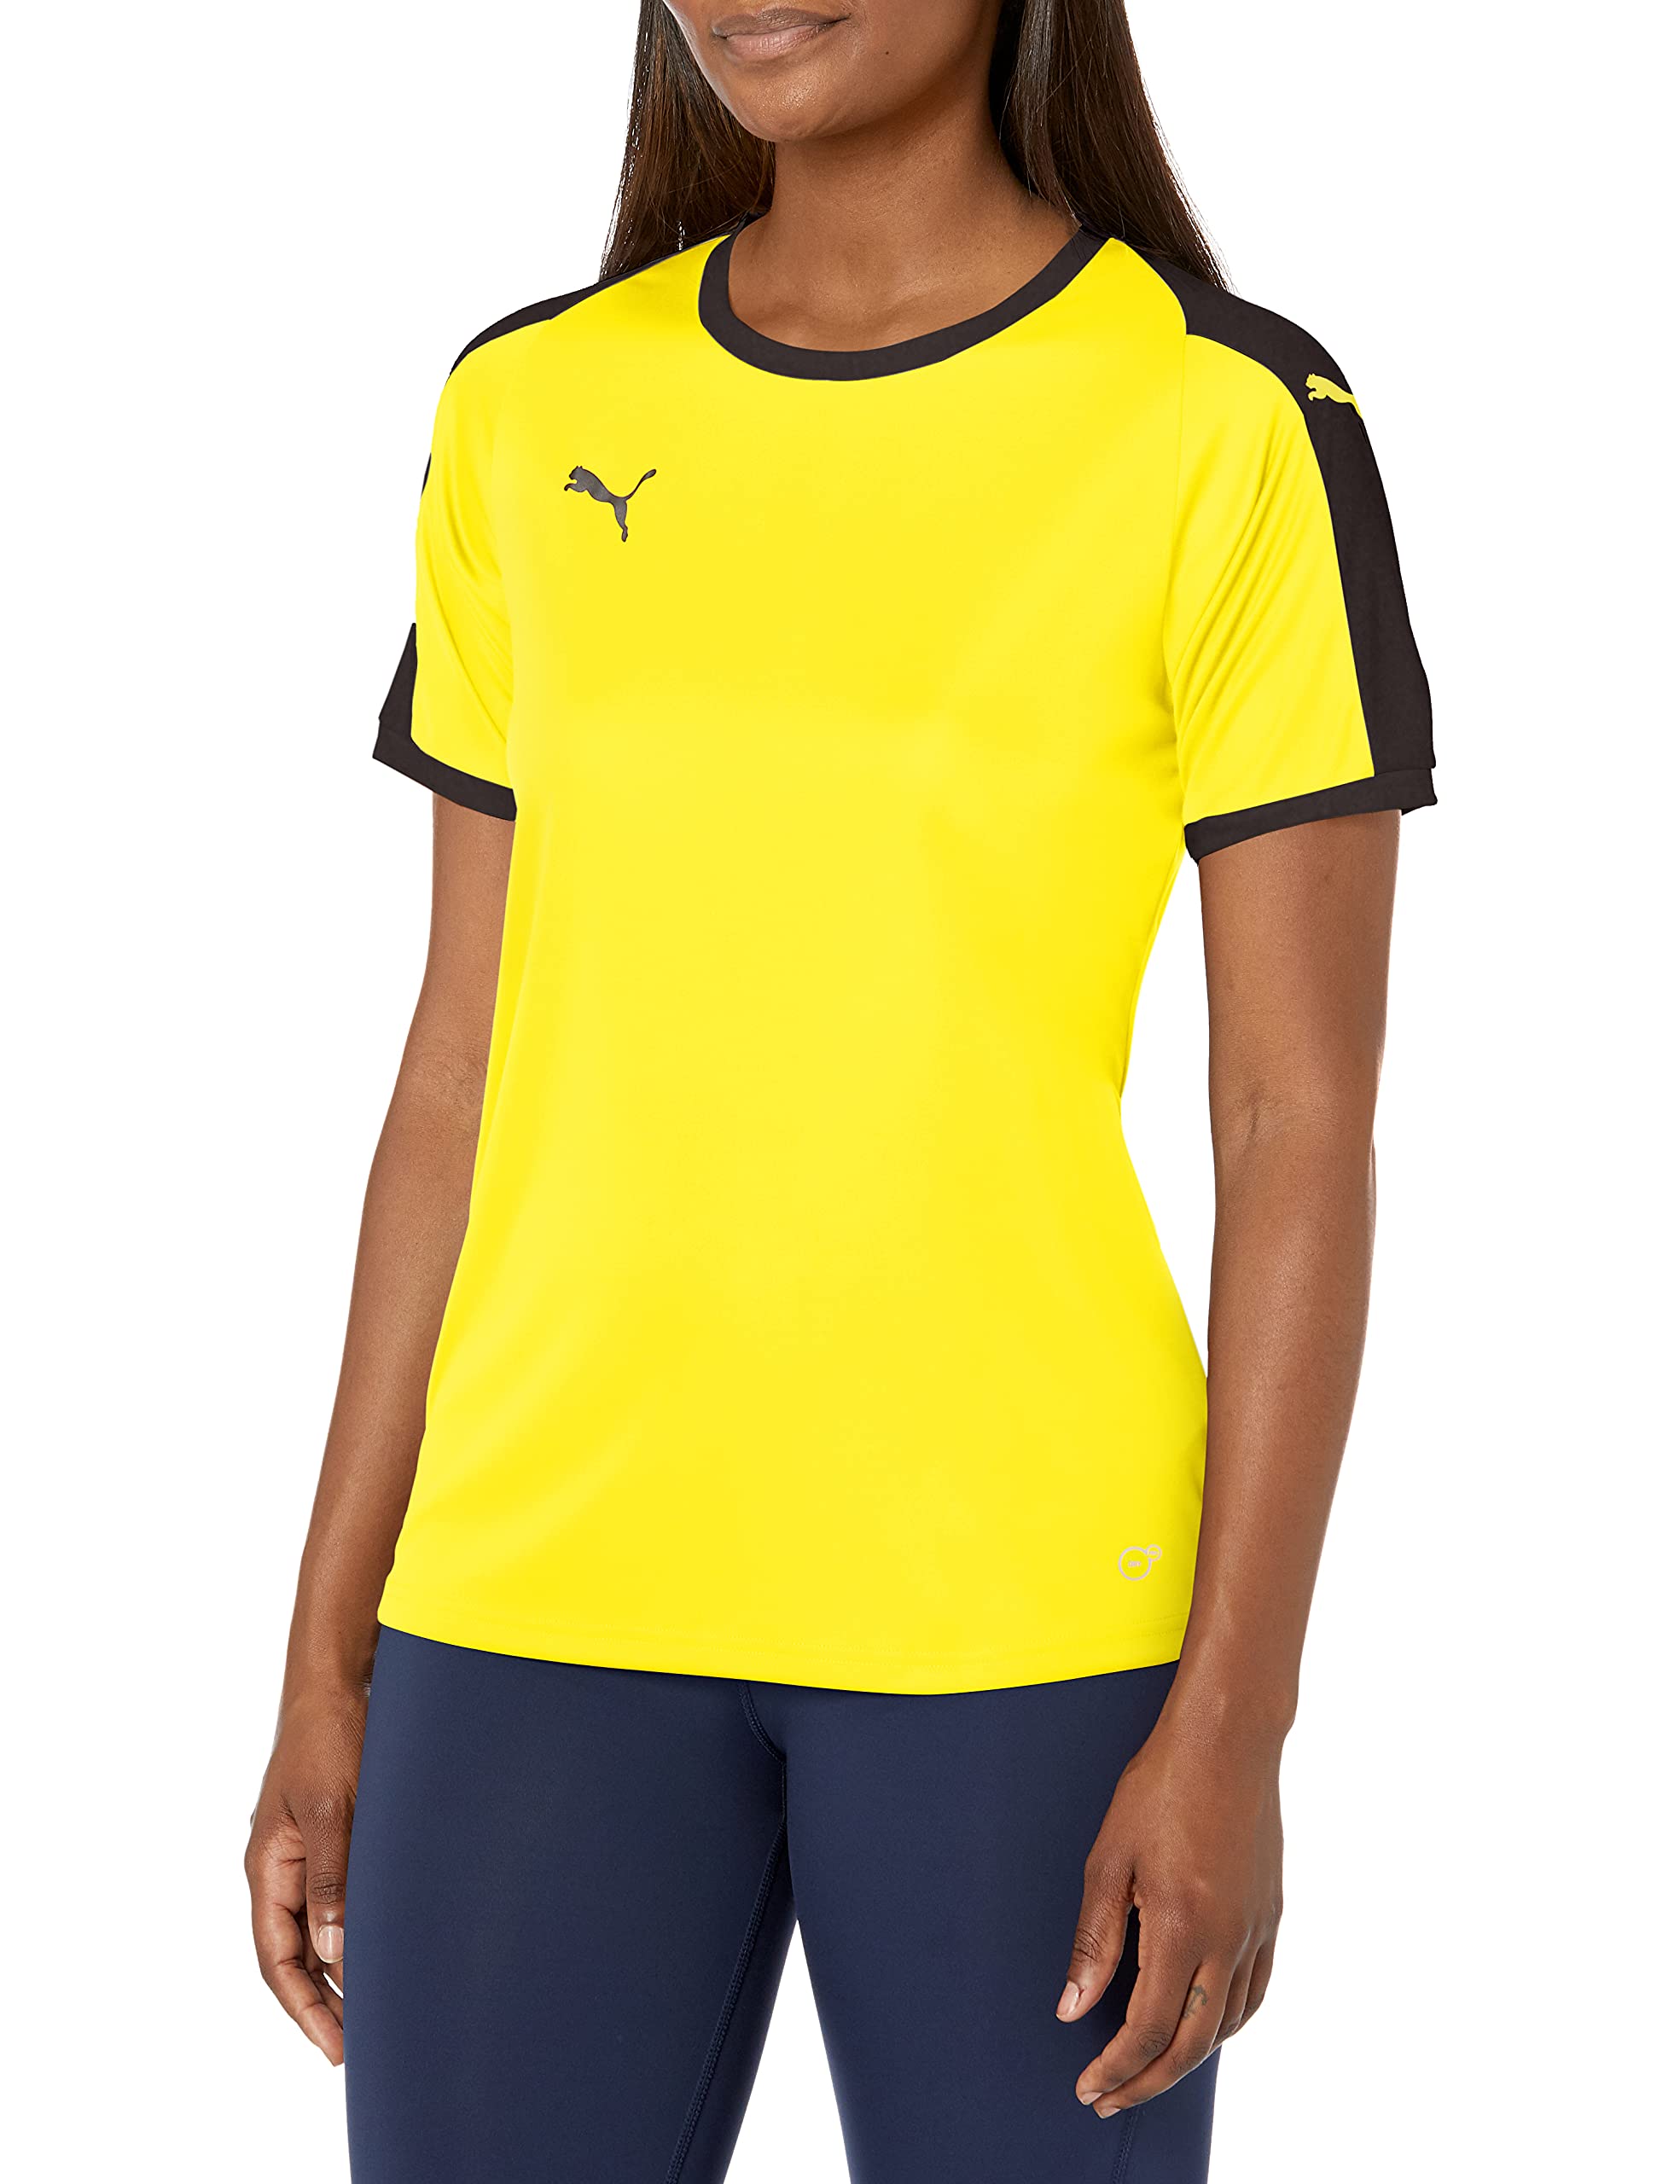 PUMA Womens Liga Jersey - Cyber Yellow/Black - Large